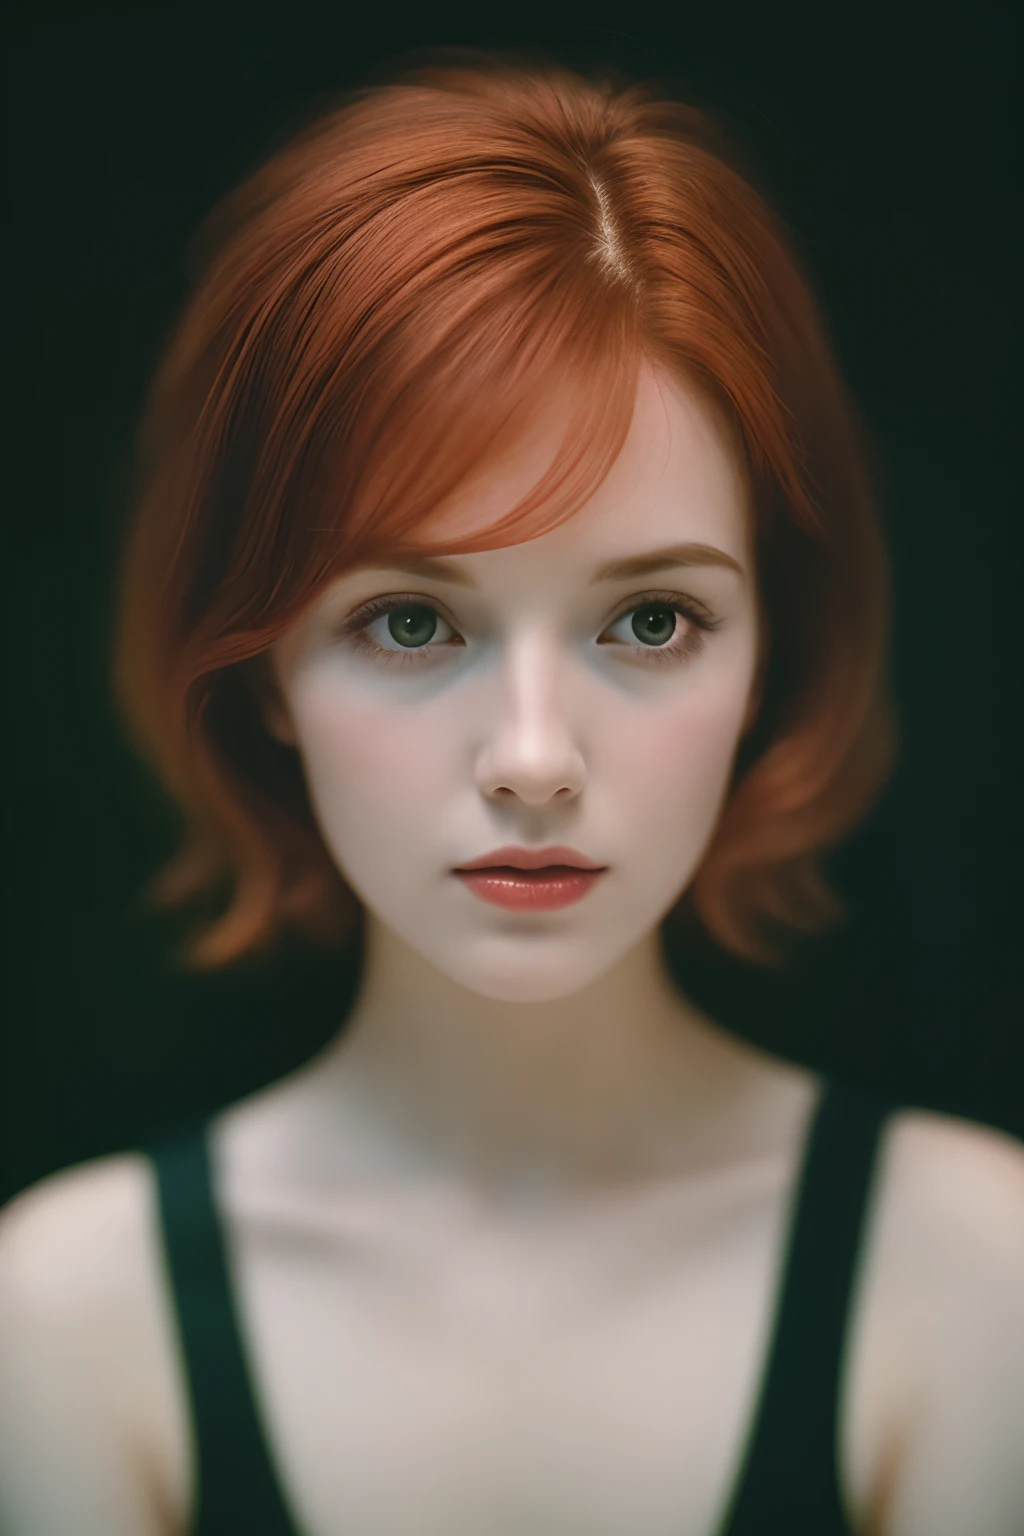 1woman,in the dark, film grain, award winning photo, (green tint:0.5), looking to the side, redhead